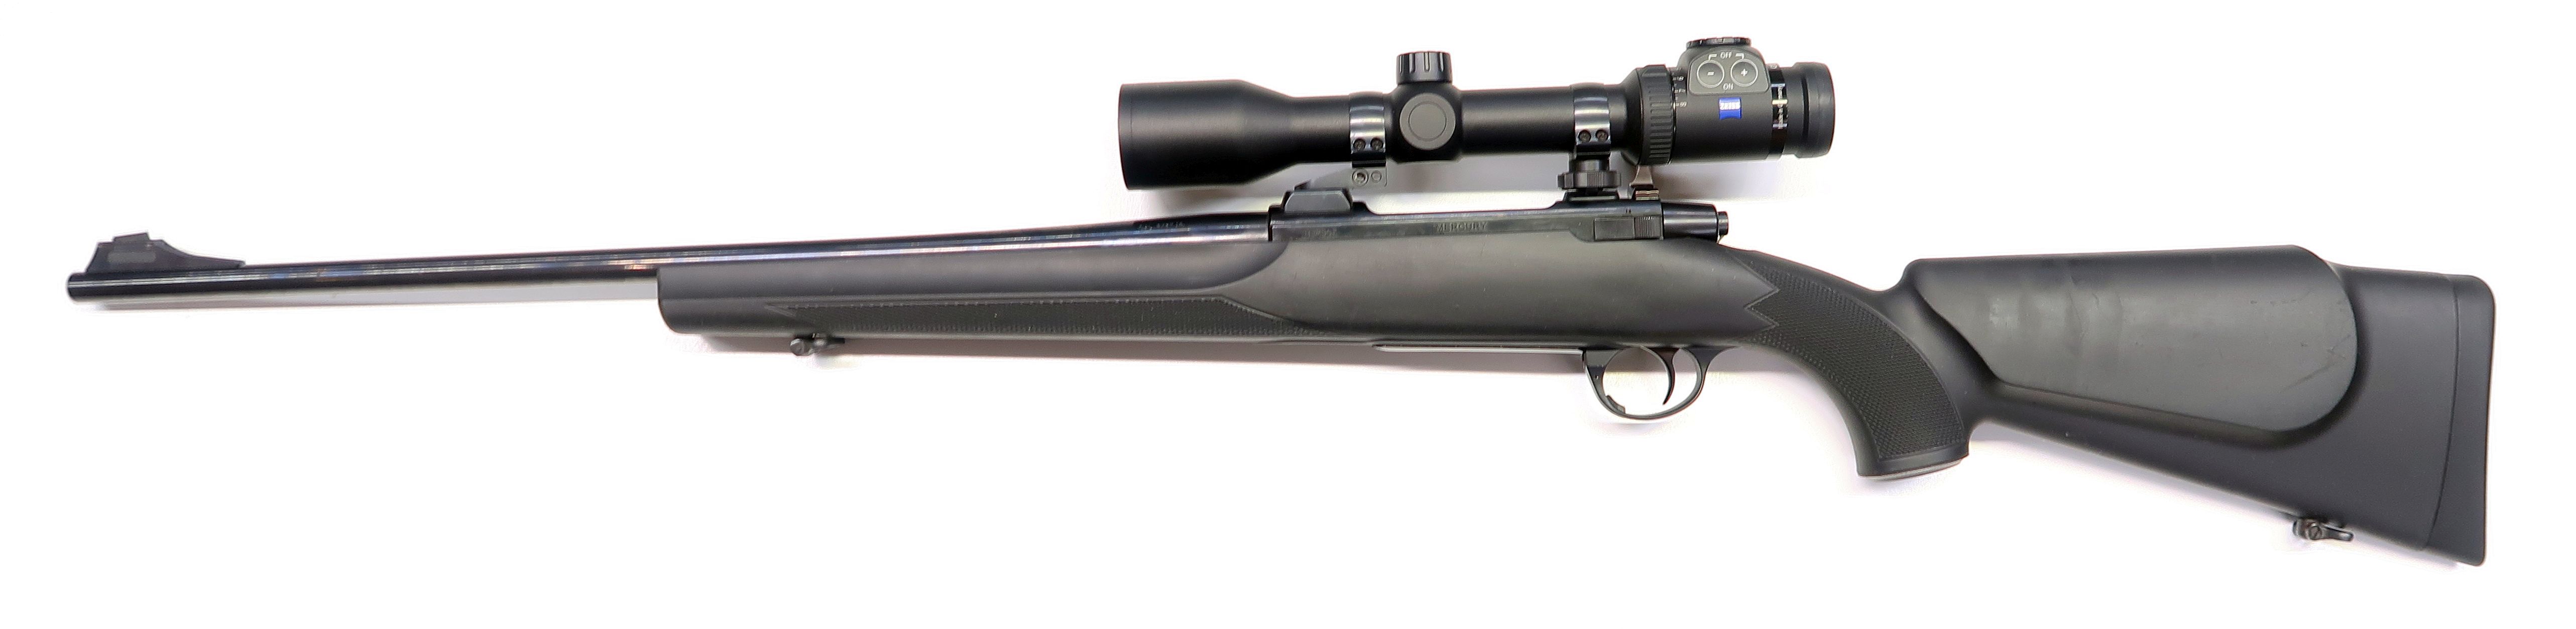 Mercury 870 8x57IS Mauser